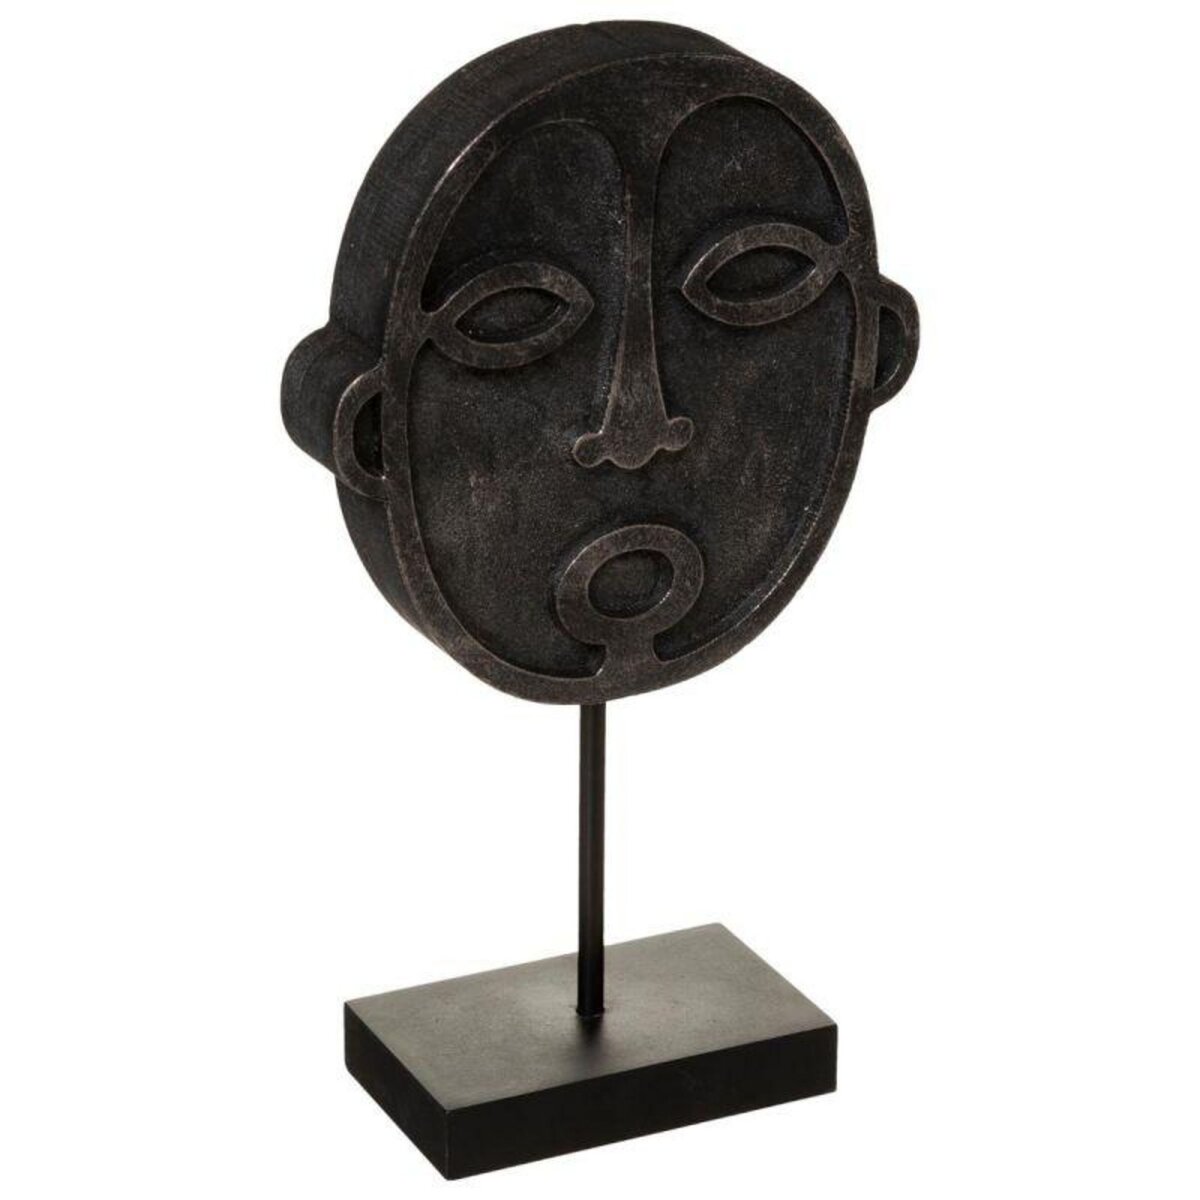  Statuette Masque à Poser  Safari  19cm Noir